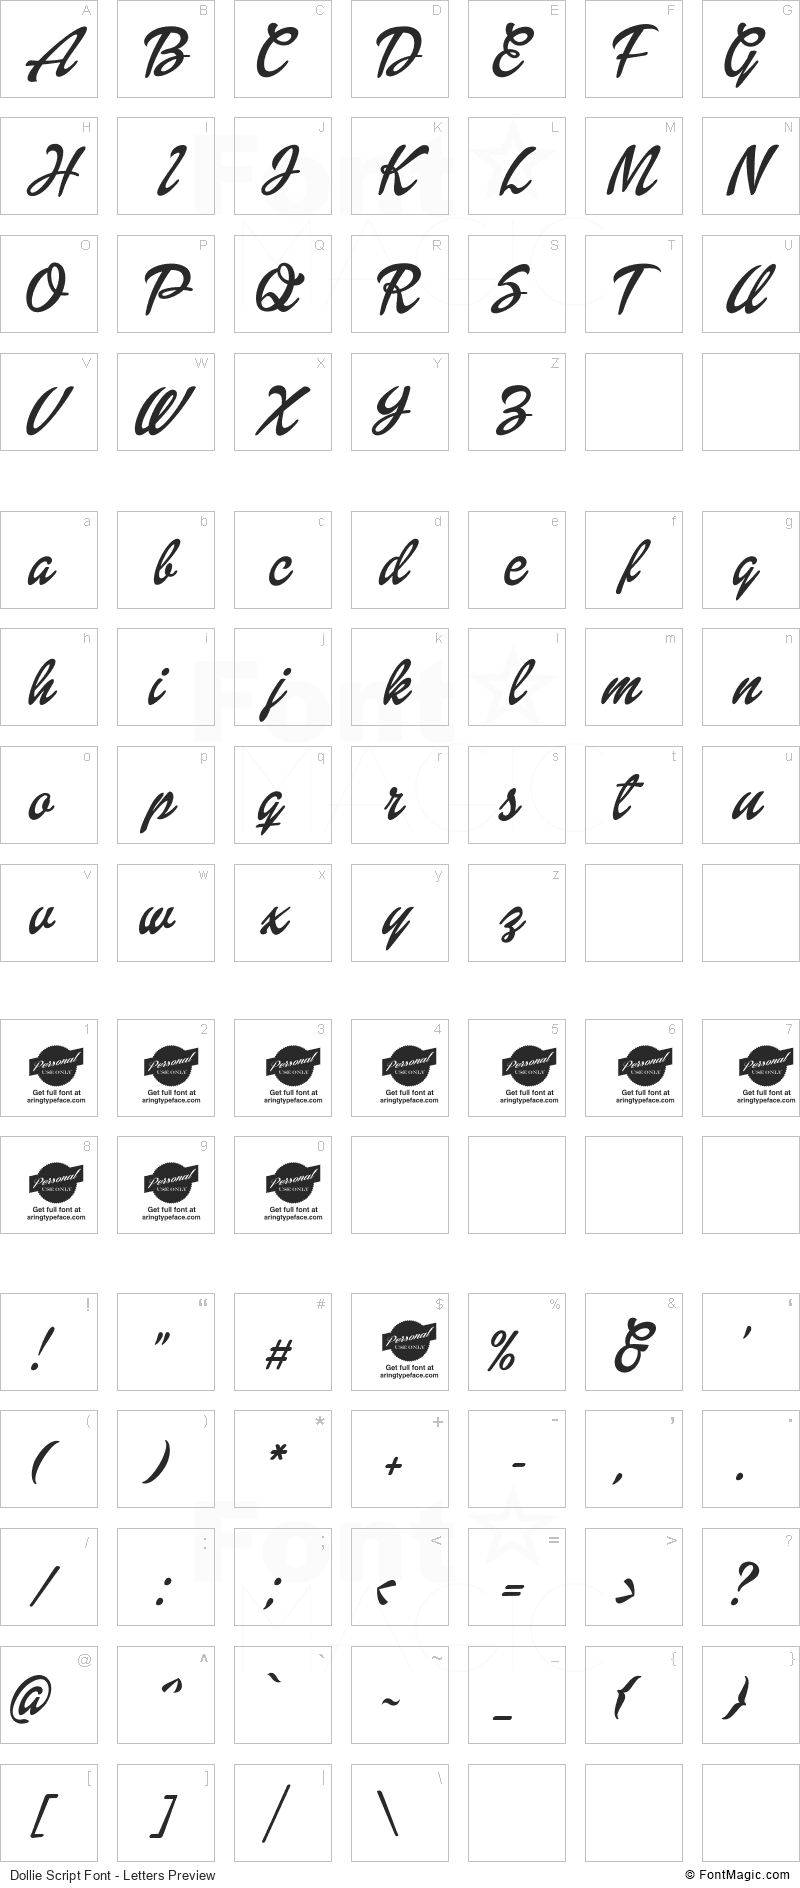 Dollie Script Font - All Latters Preview Chart